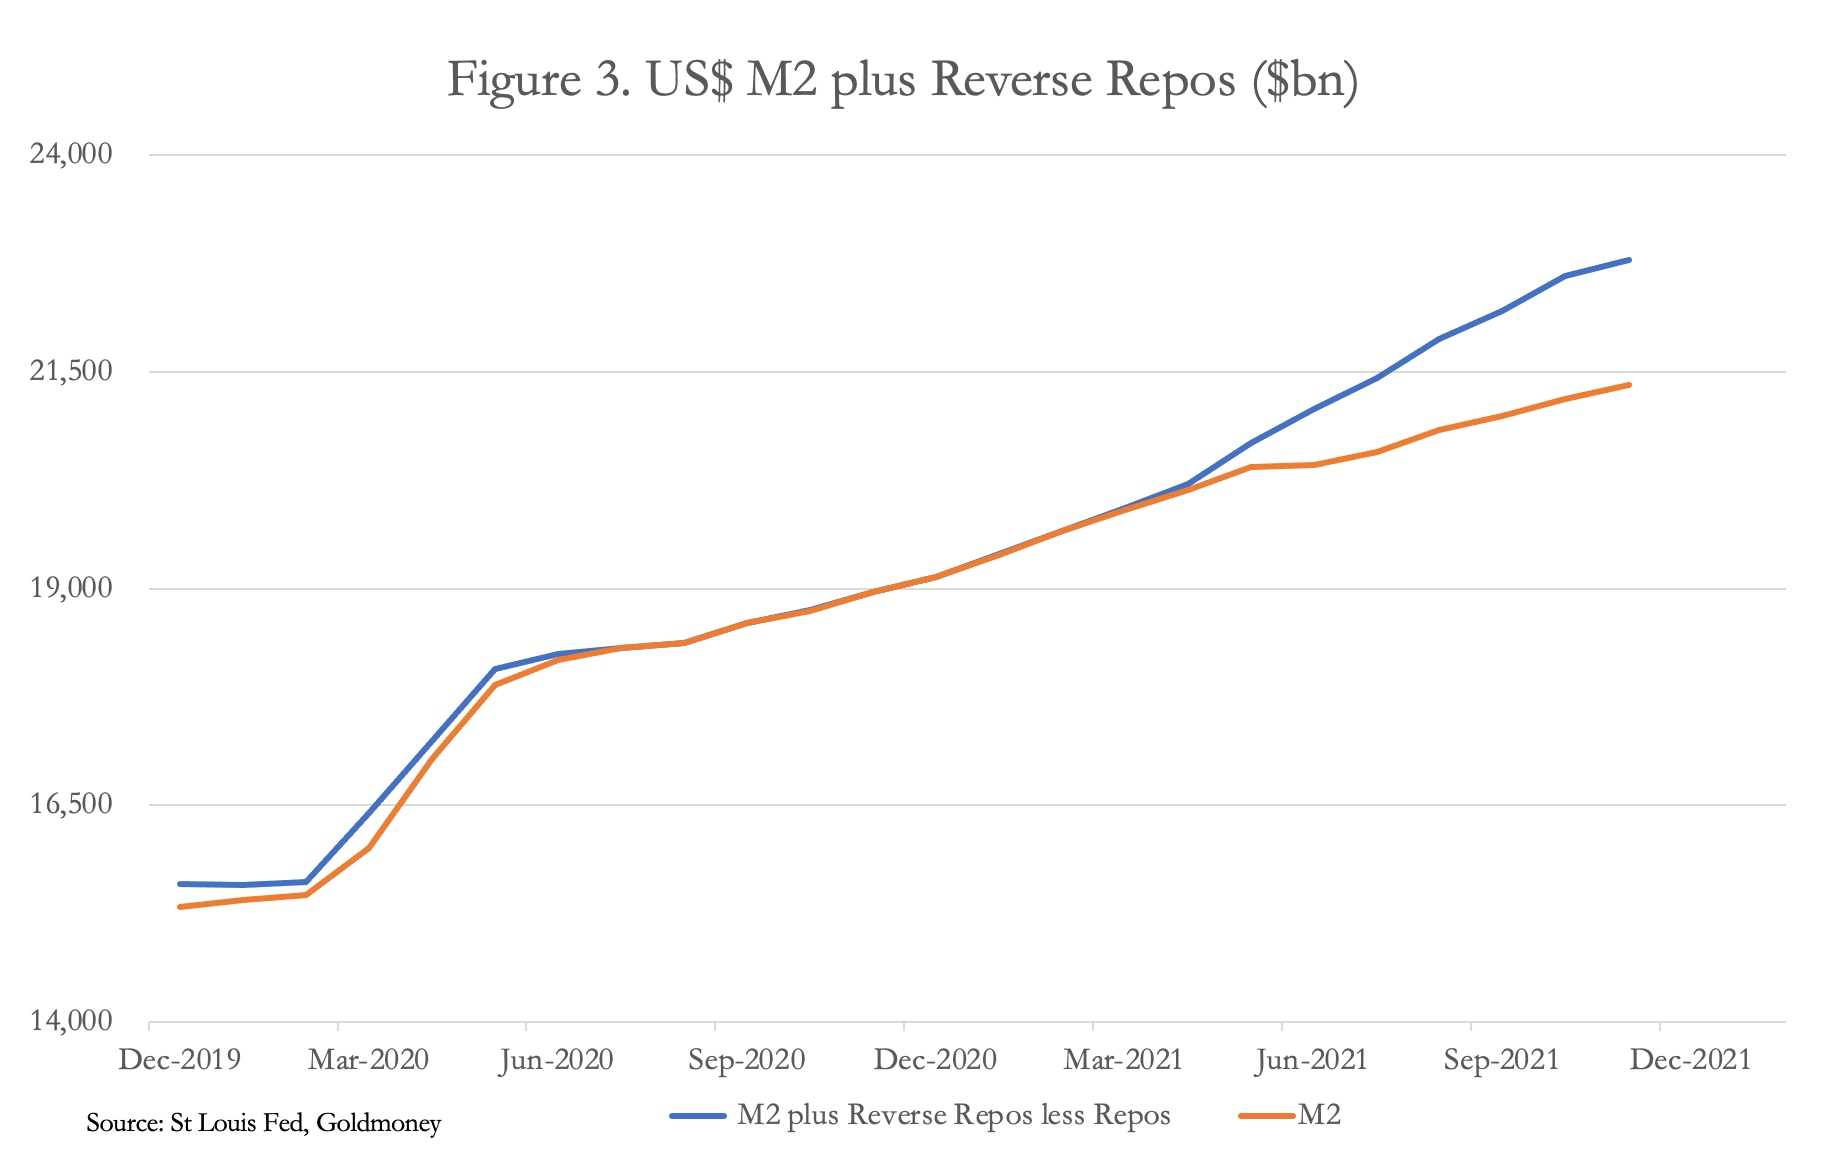 US$ M2 Plus Reverse Repos